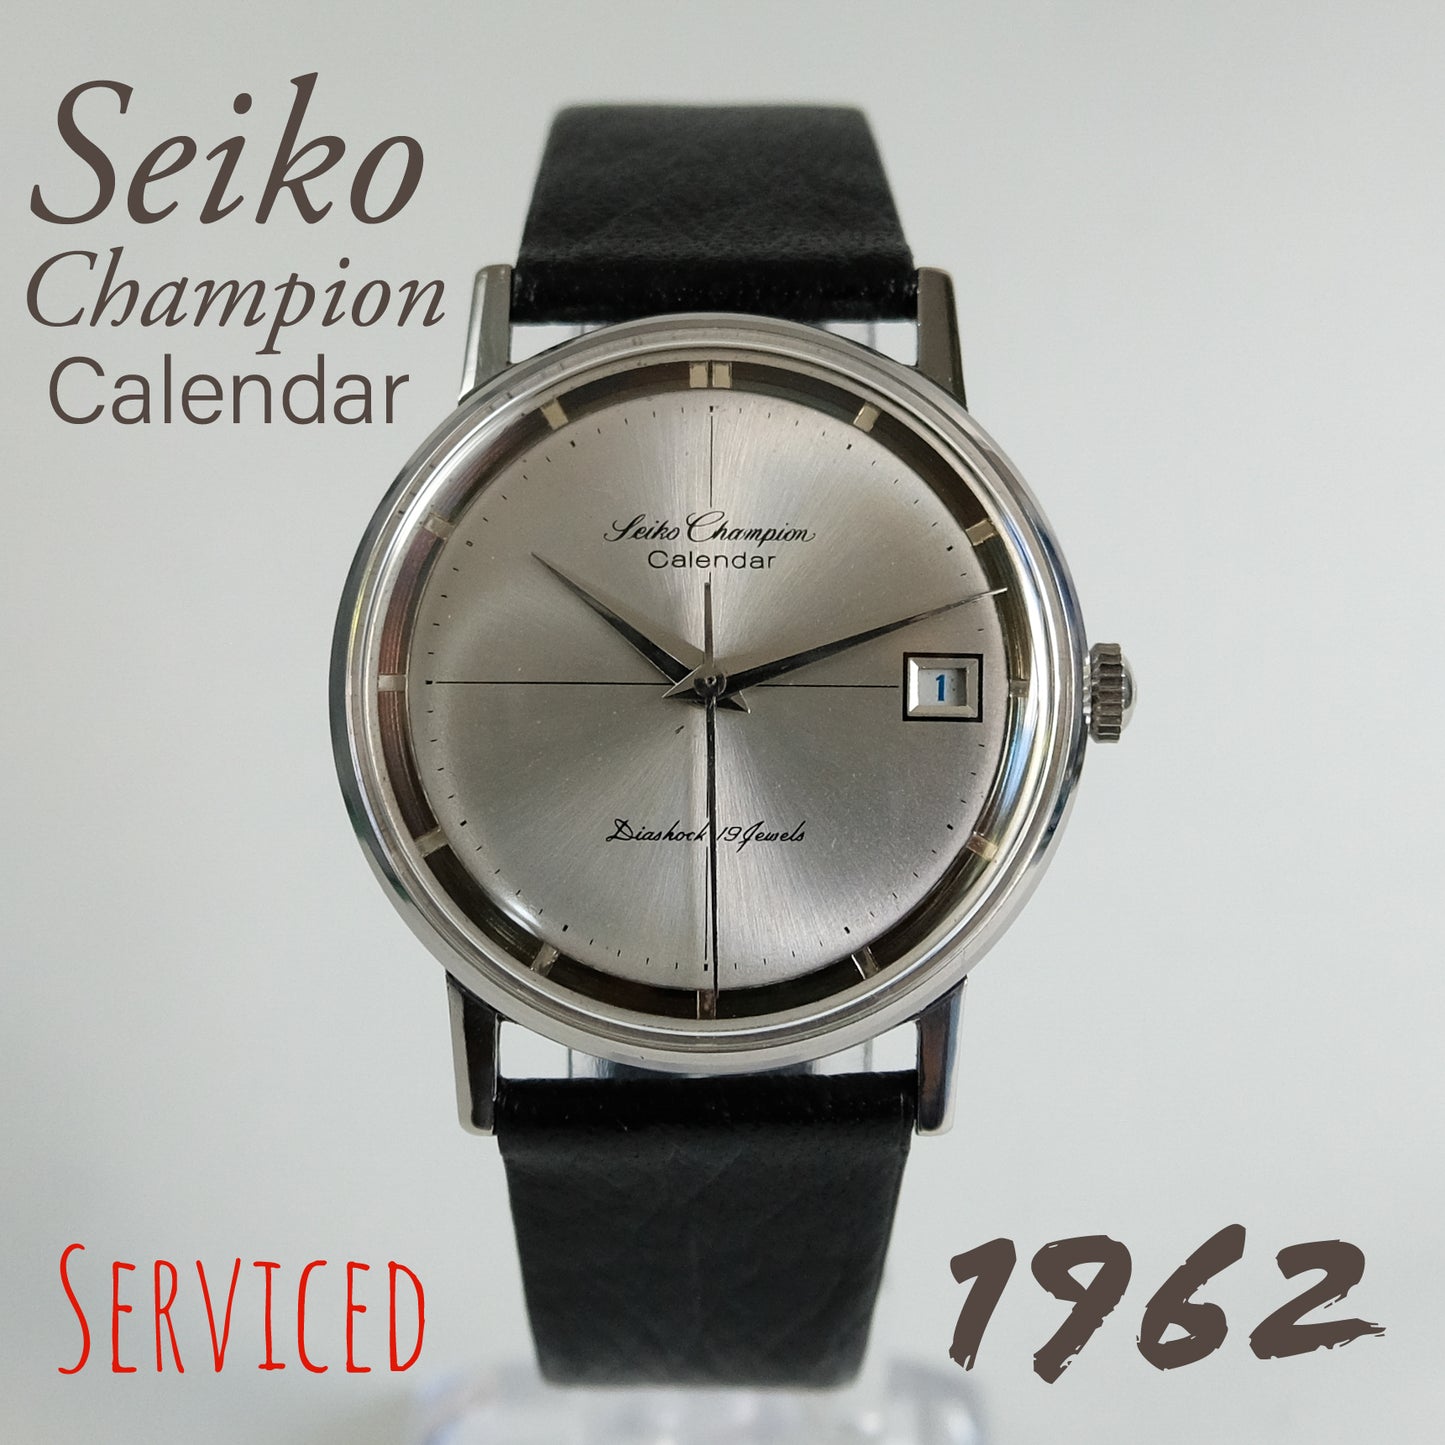 1962 Seiko Champion Calendar 15032E